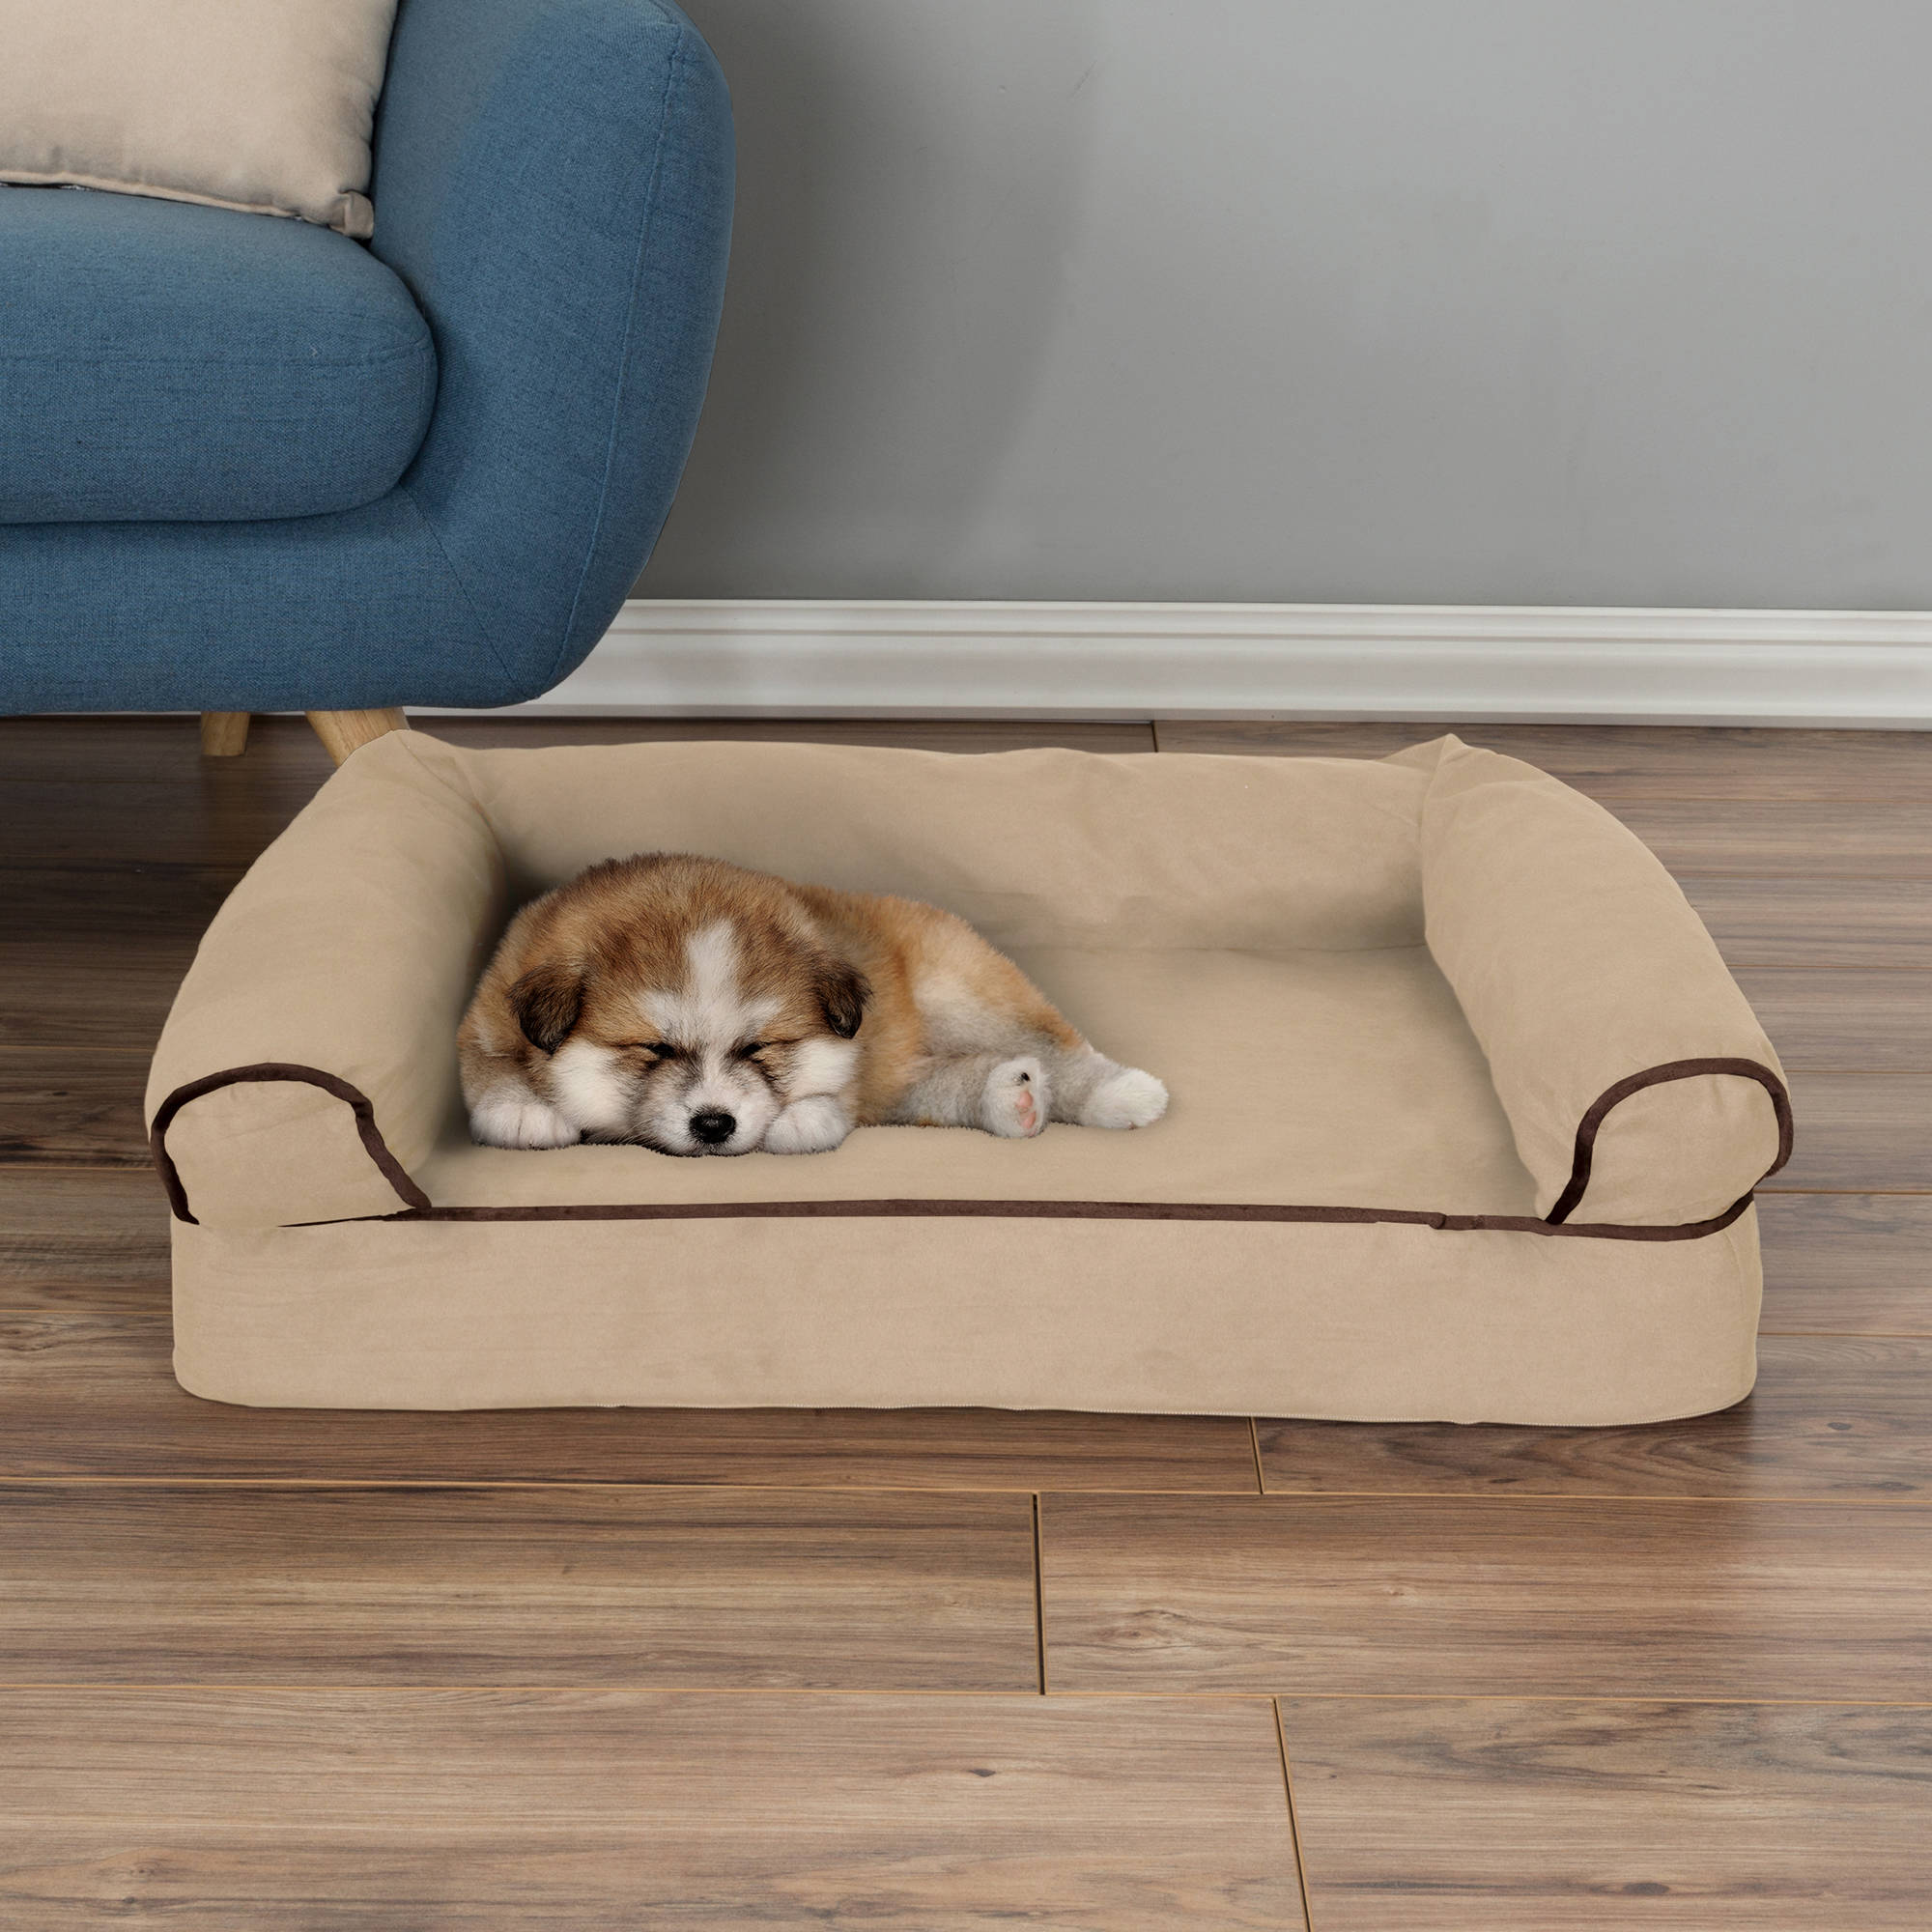 Orthopedic Dog Sofa Bed, Memory Foam Pet Bed with Foam Stuffed Bolsters PETMAKER - image 2 of 6